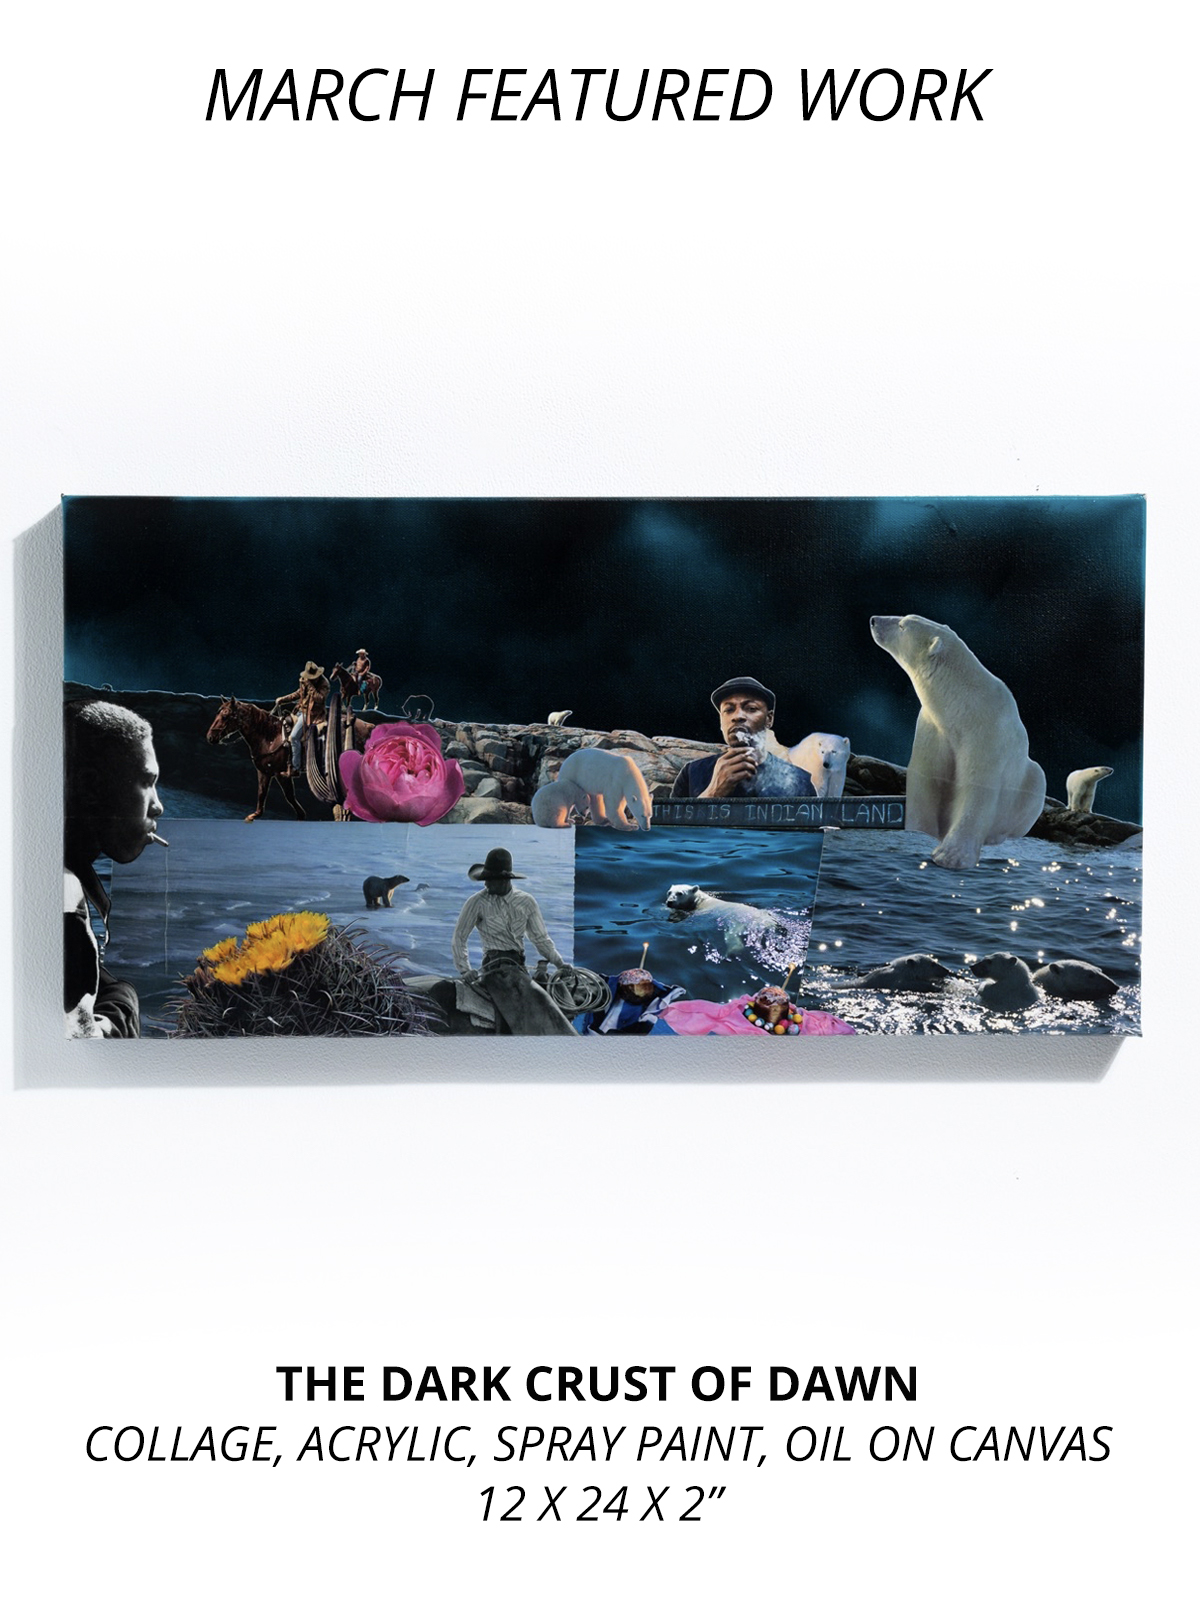 The Dark Crust of Dawn,
collage, acrylic, spray paint ink, oil on canvas
12 x 24 x 2